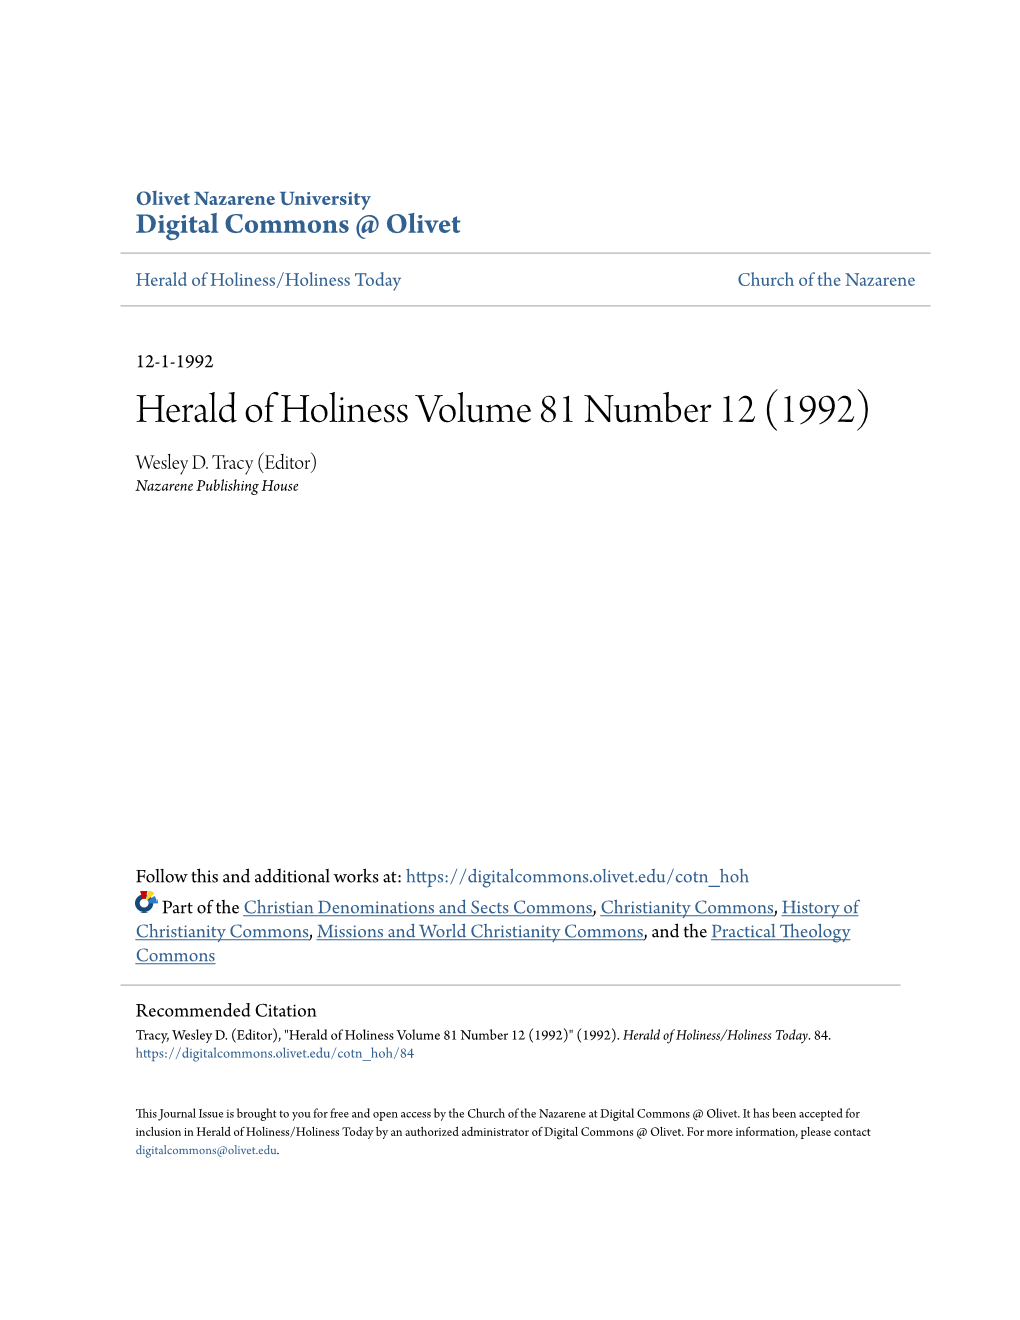 Herald of Holiness Volume 81 Number 12 (1992) Wesley D